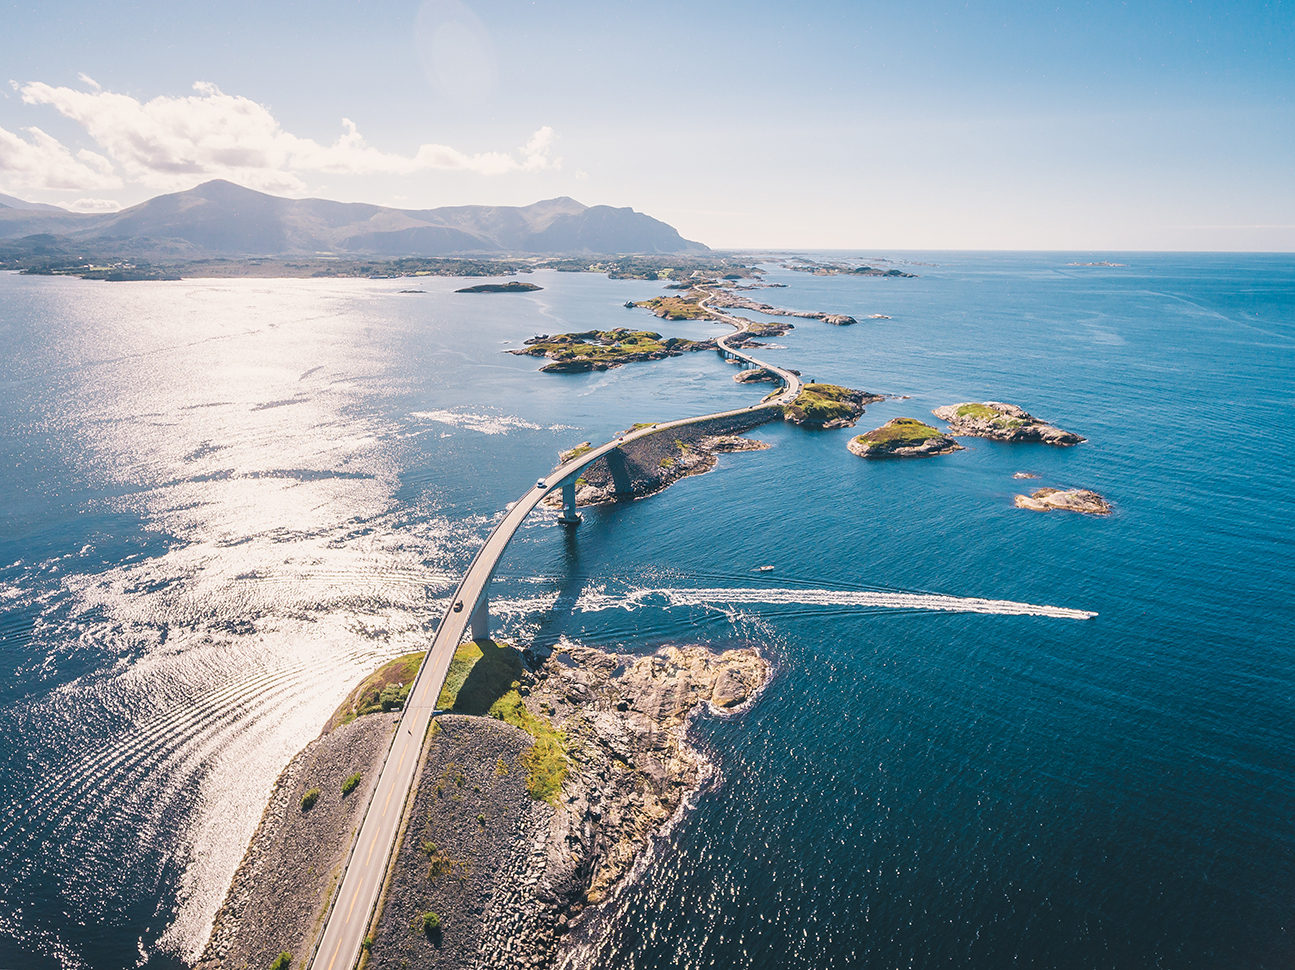 beautiful bridges crossing the Norway archipelagos